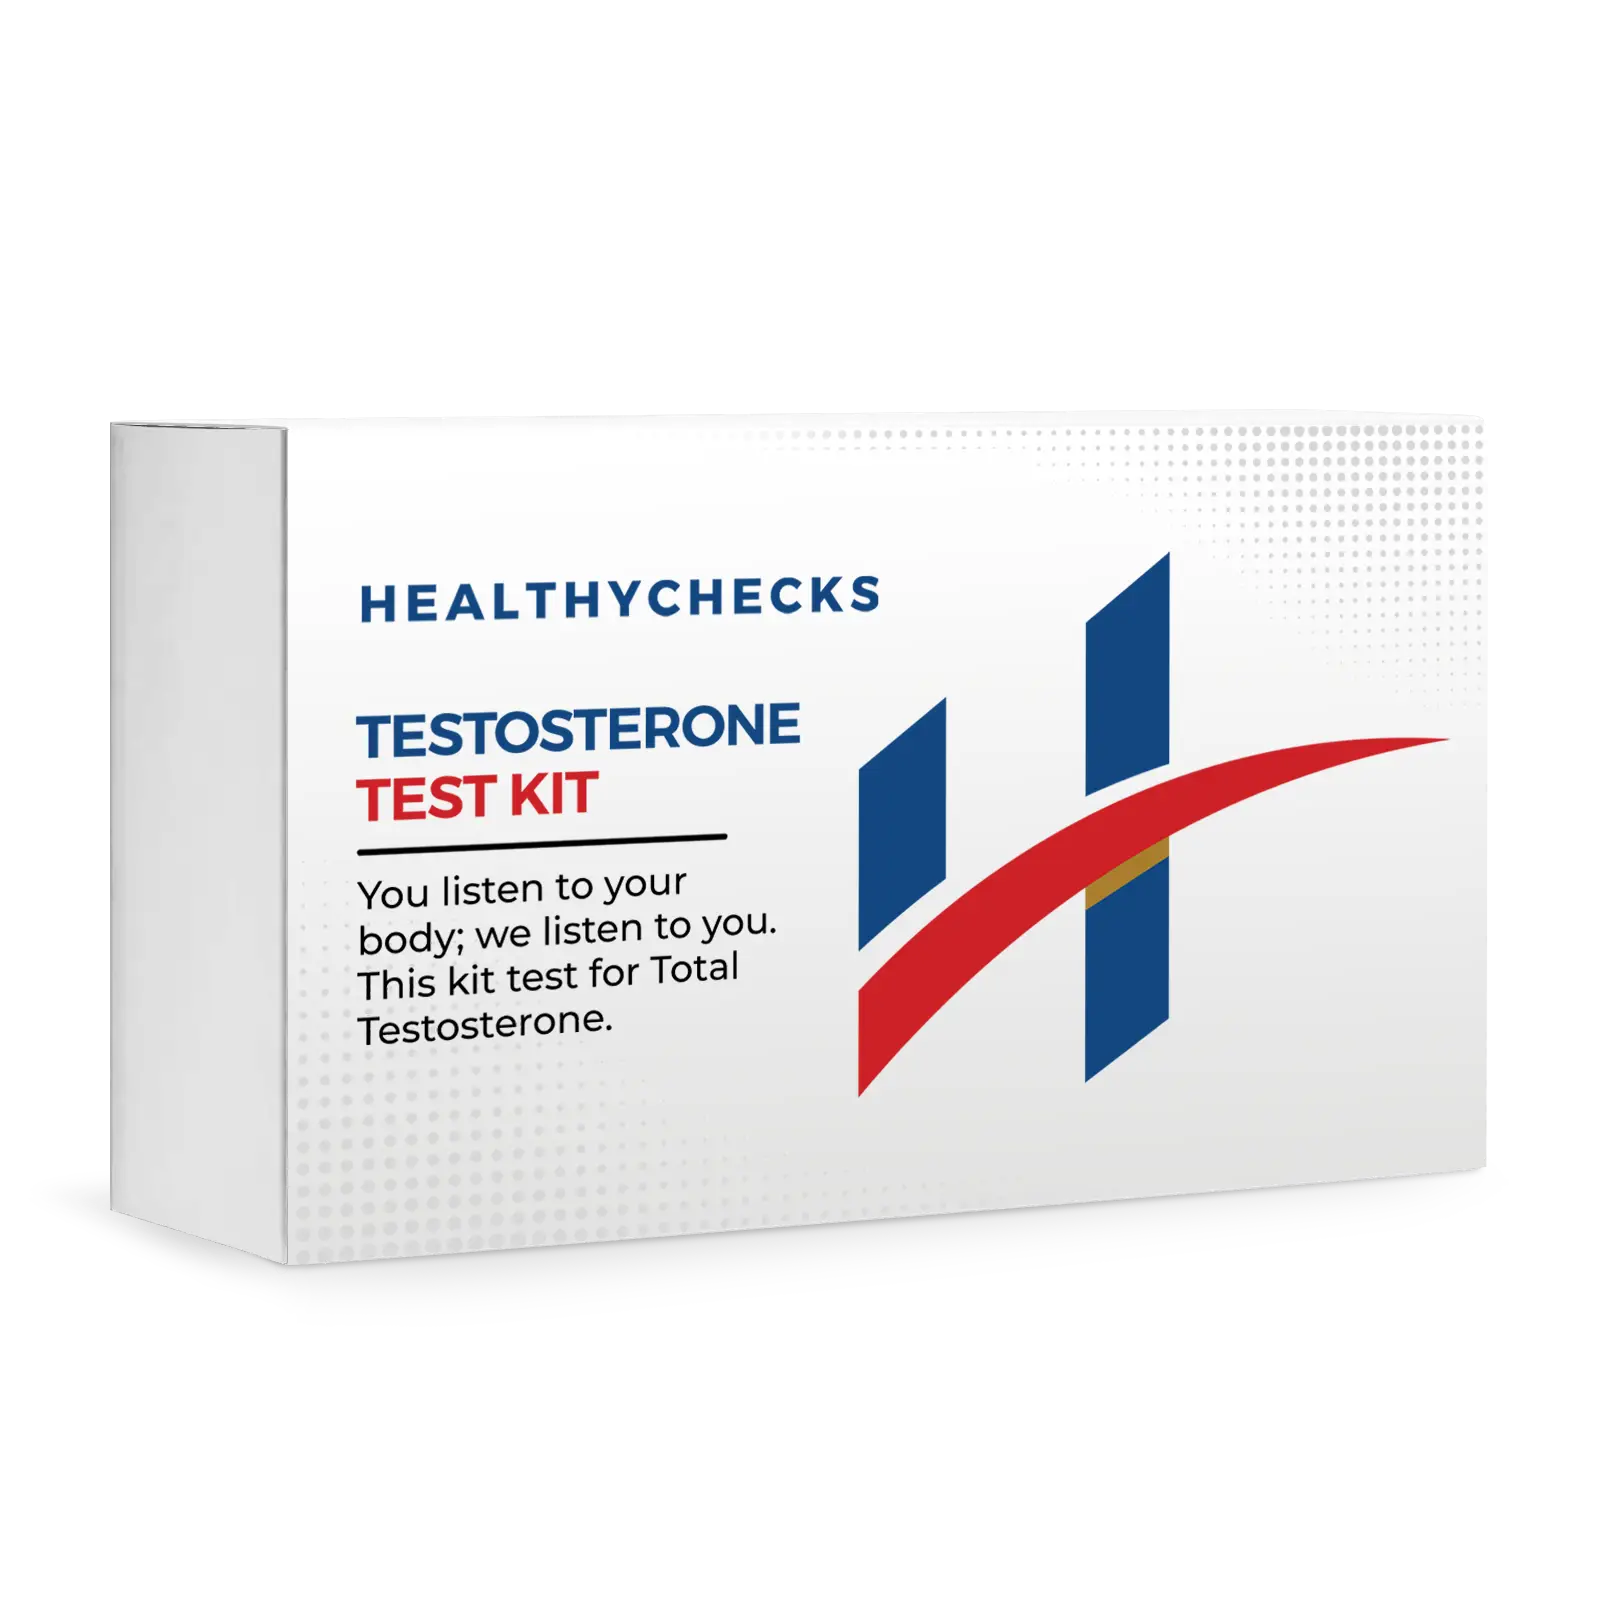 Testosterone Test - Male - HEALTHYCHECKS 